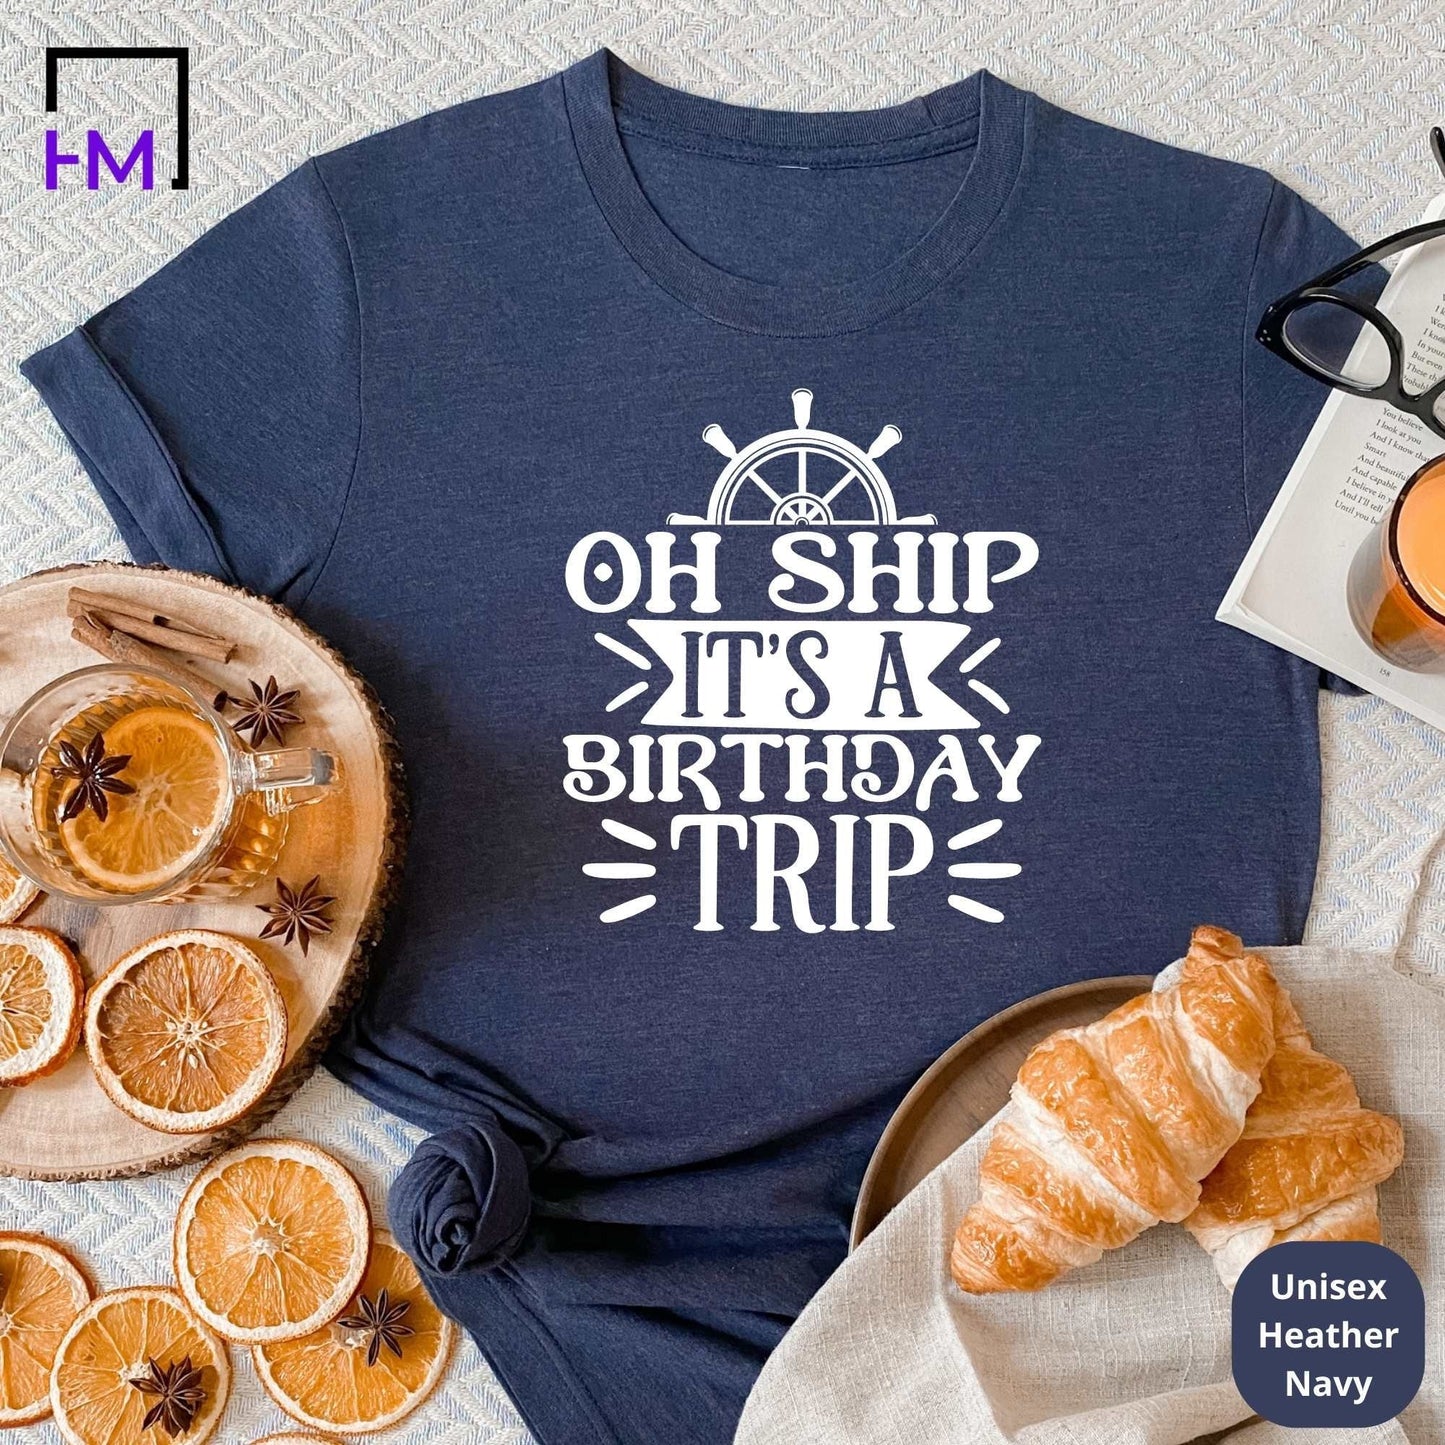 Oh Ship It's a Birthday Trip, Birthday Cruise Shirts for Girls Trip